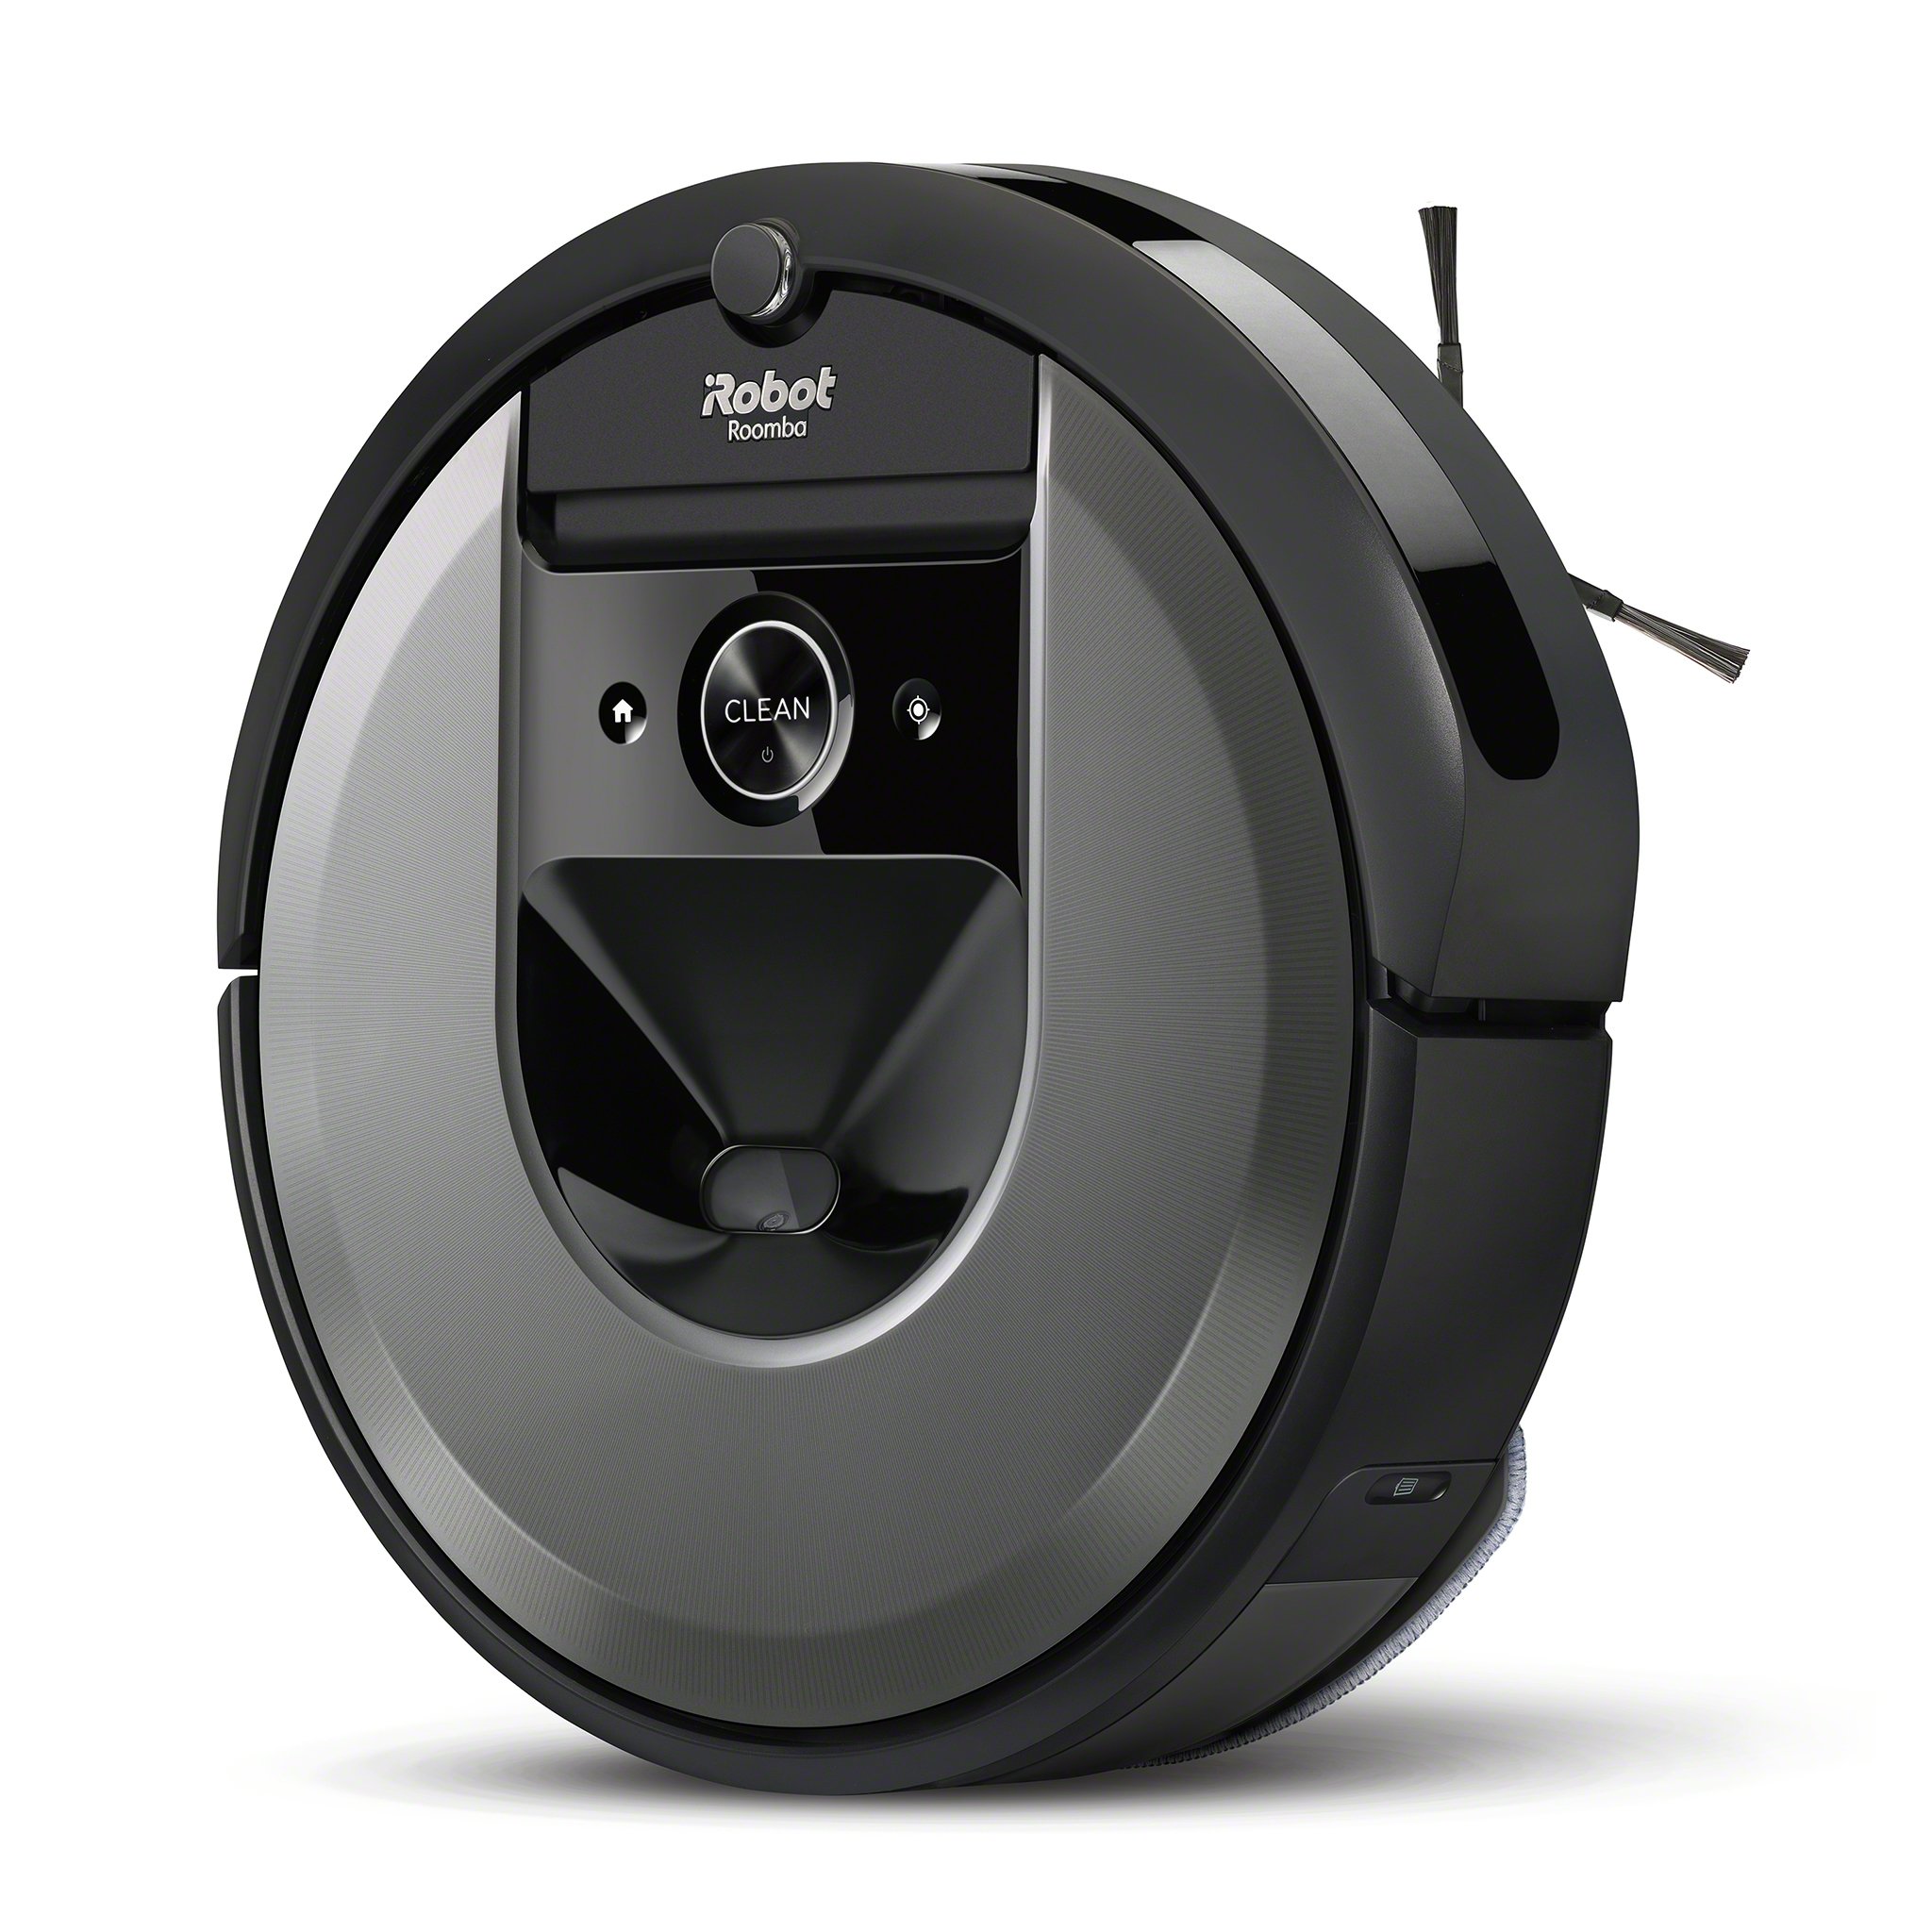 Acheter en ligne IROBOT Roomba Combo i8 à bons prix et en toute